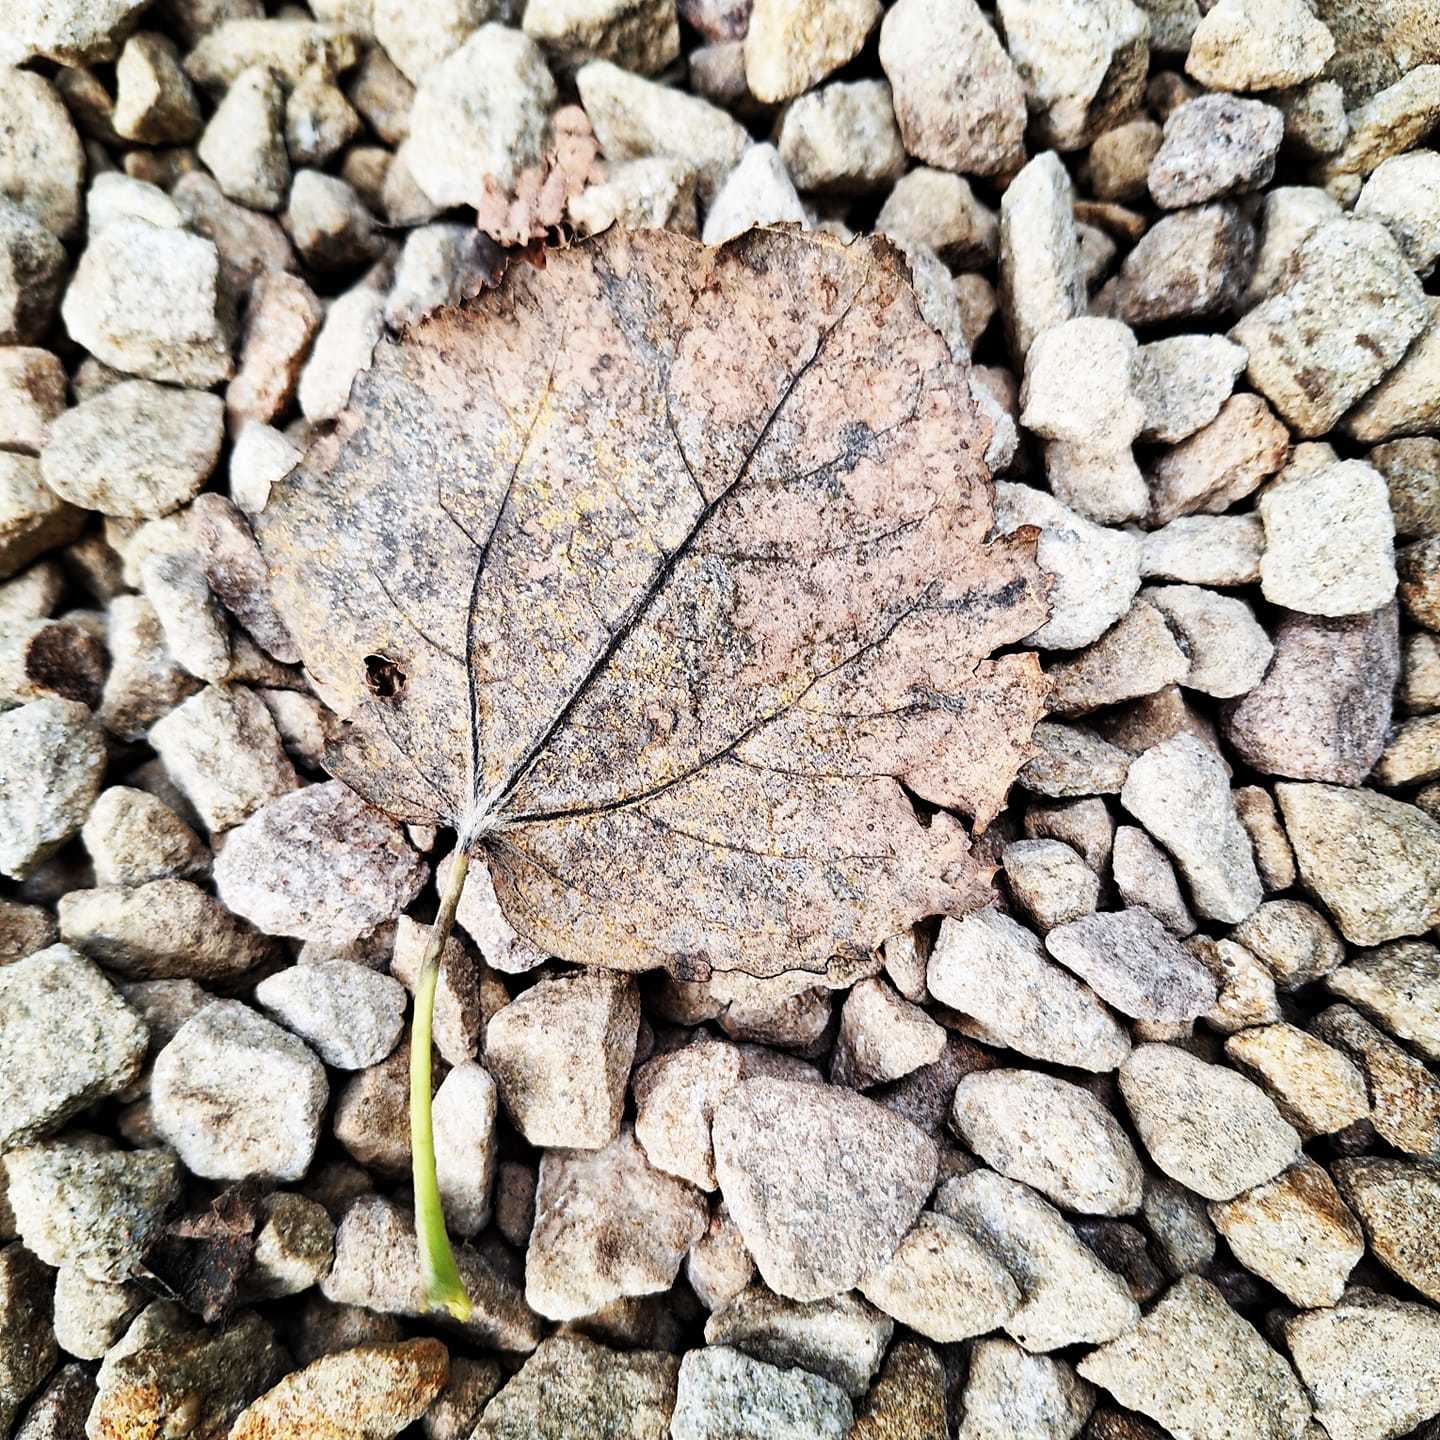 Autumn leaf by Debbie Flannery